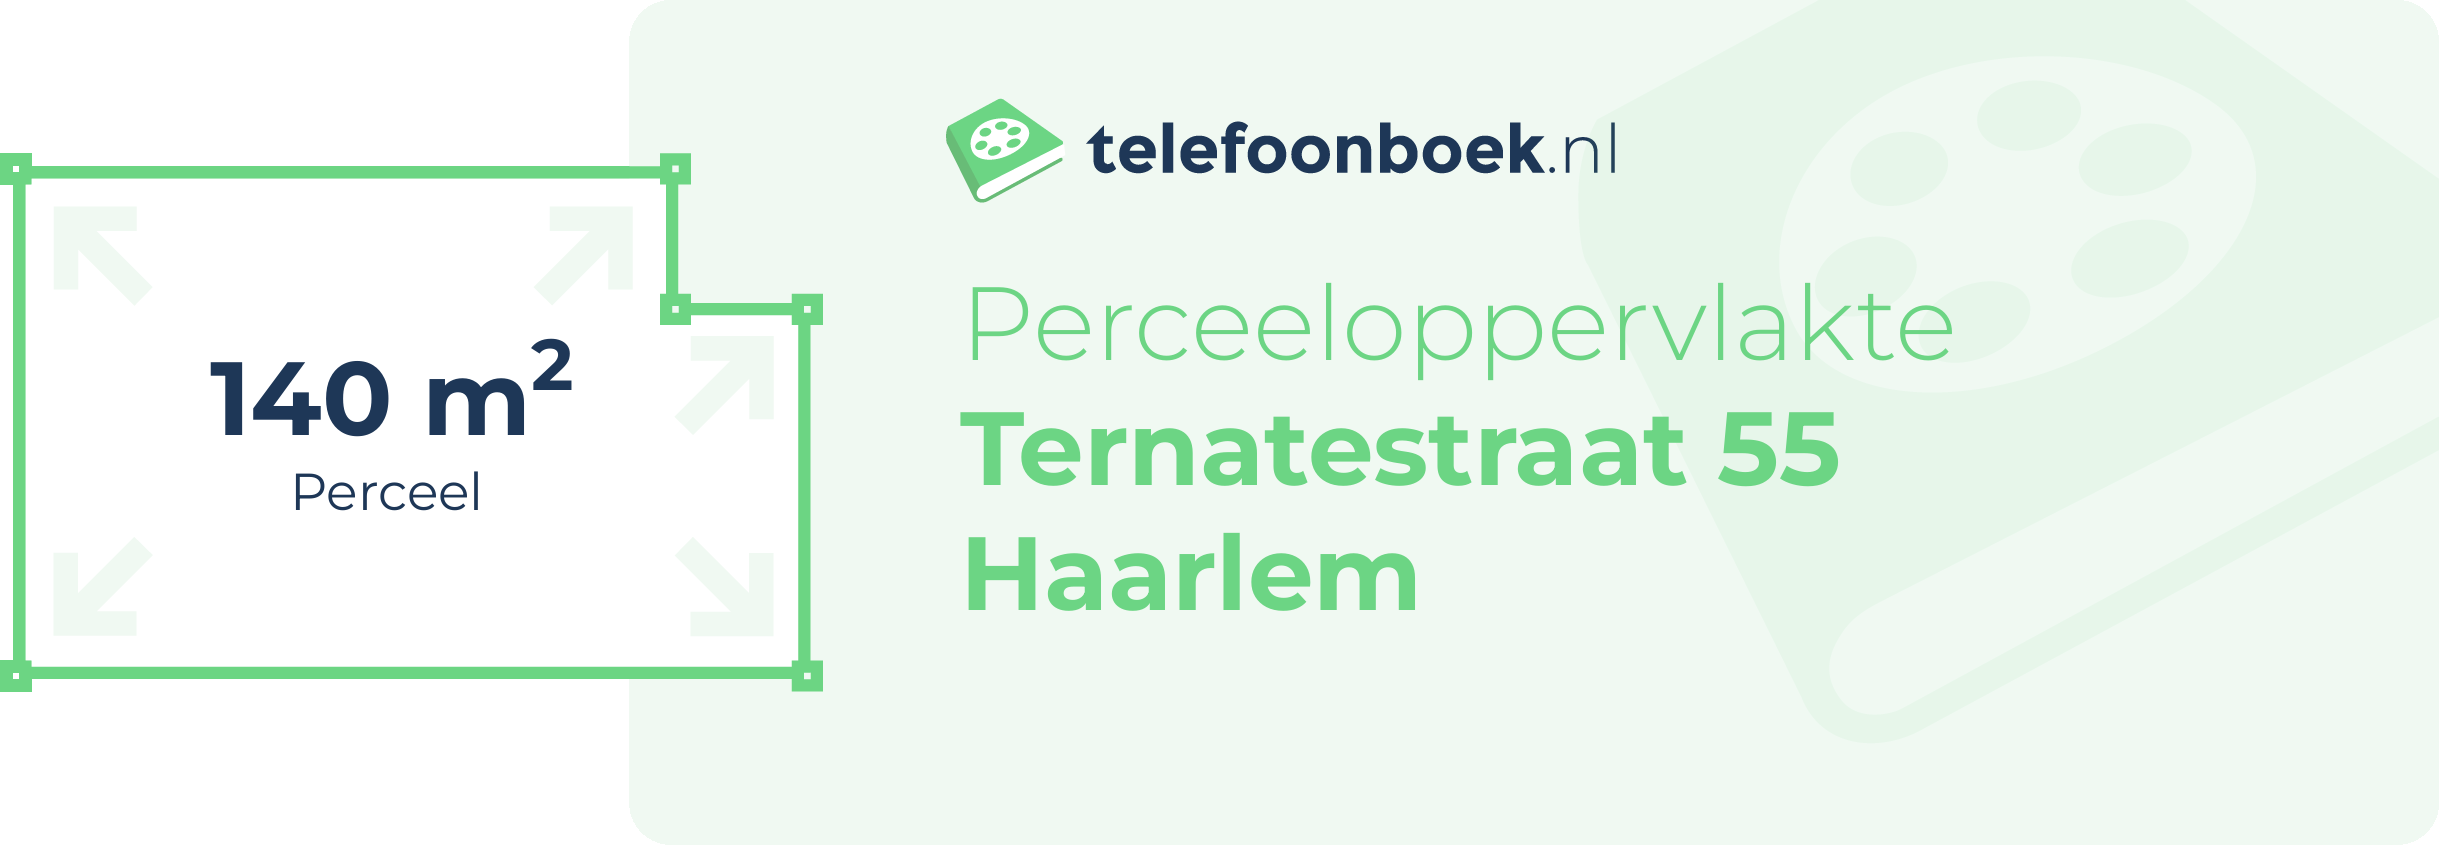 Perceeloppervlakte Ternatestraat 55 Haarlem